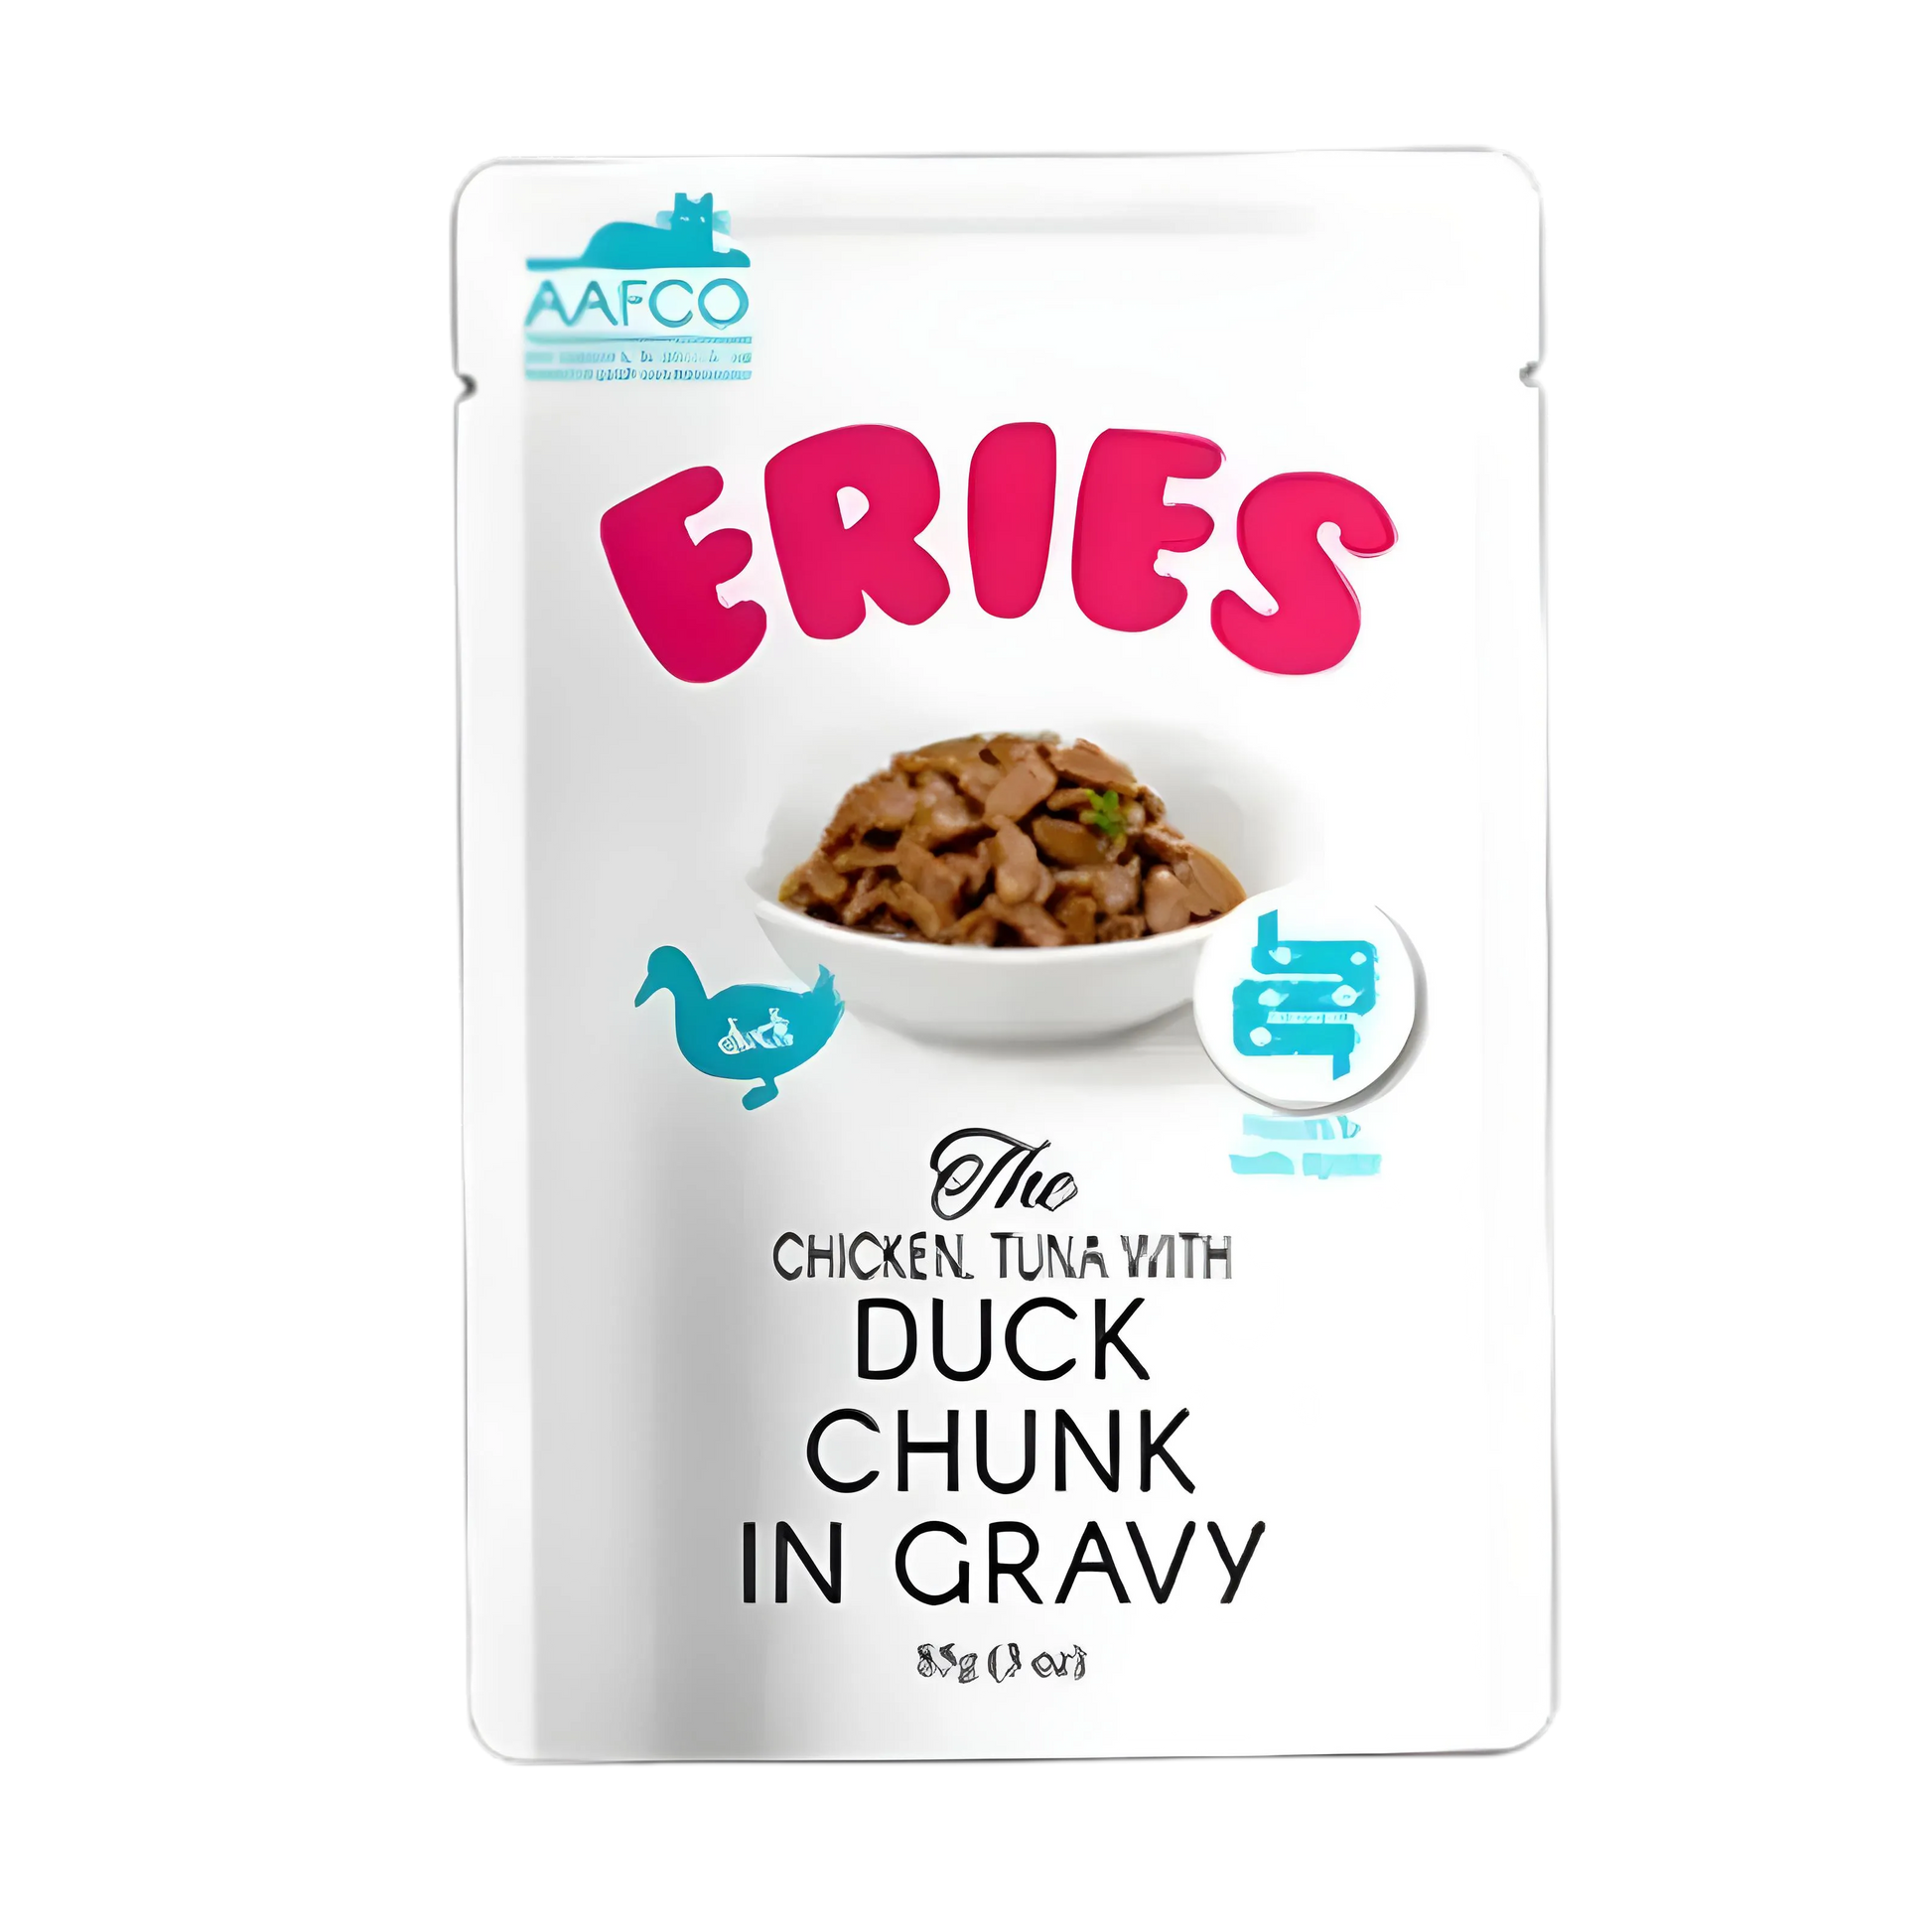 Eries Pouch in Gravy Duck Chuck 85g-Eries-Catsmart-express